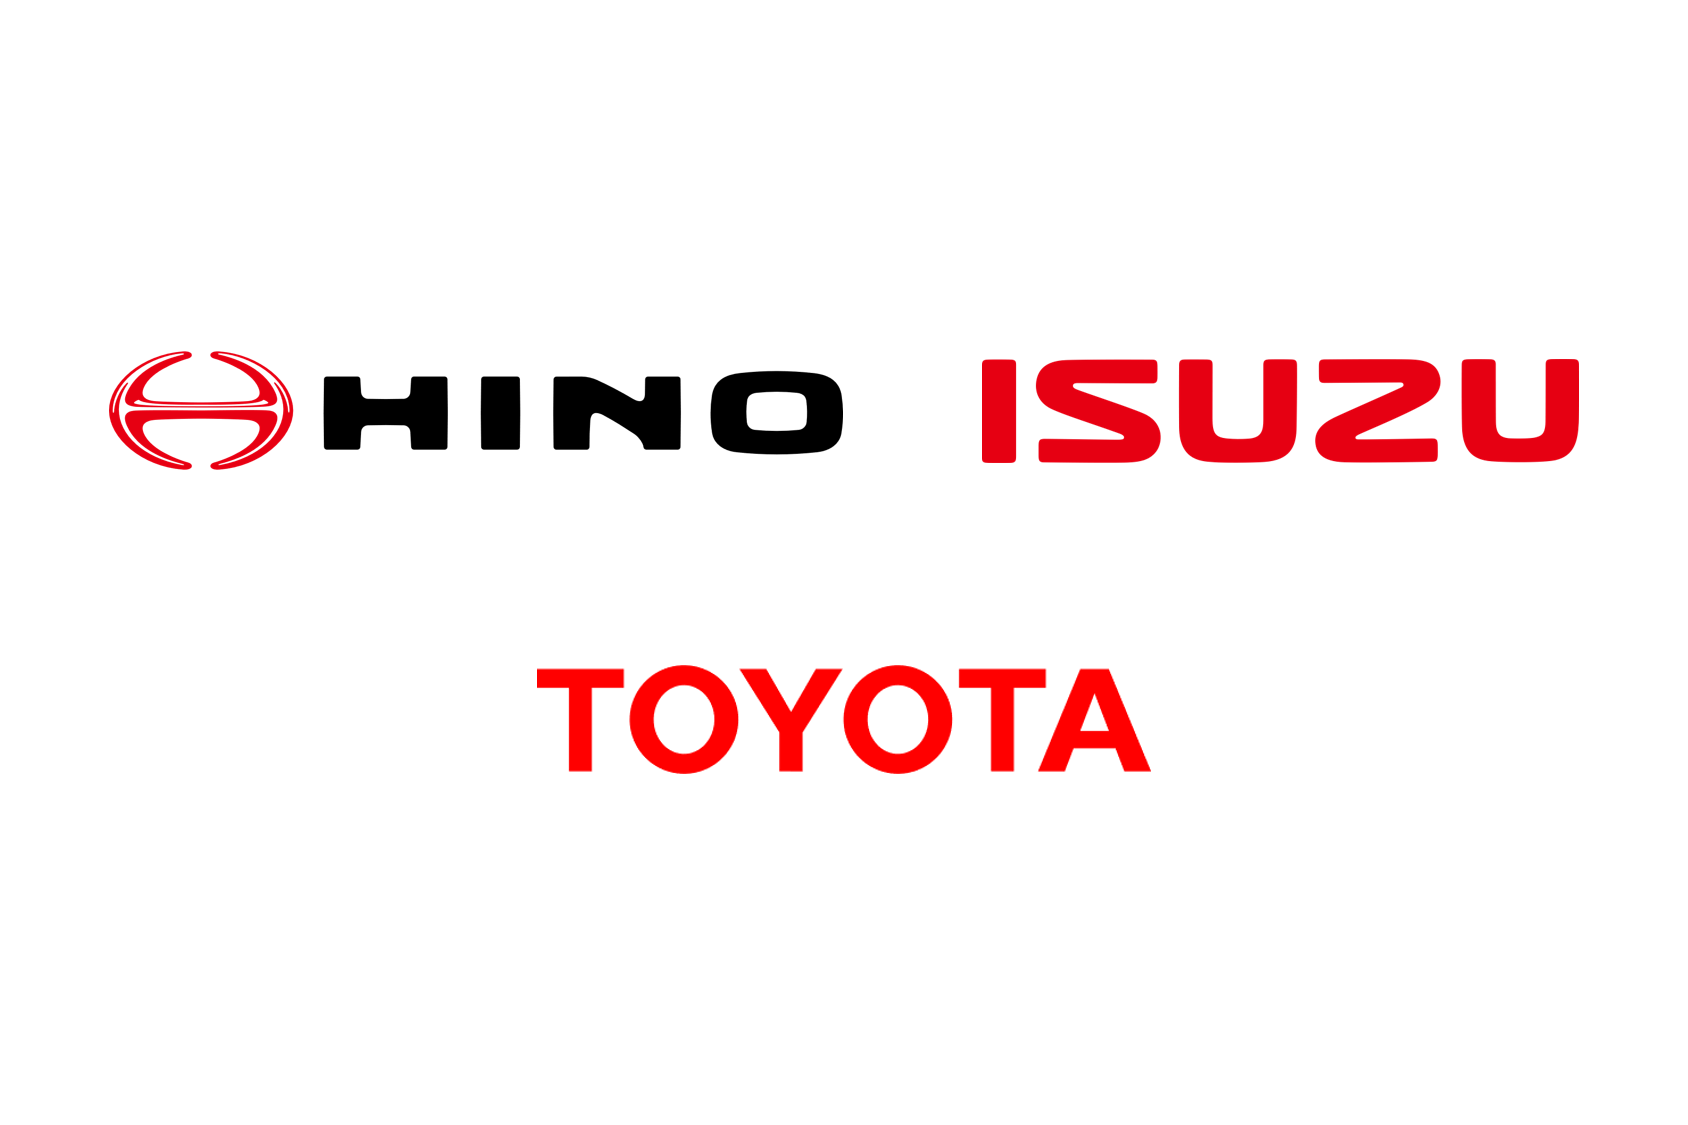 Isuzu, Hino, Toyota to Accelerate CASE Response